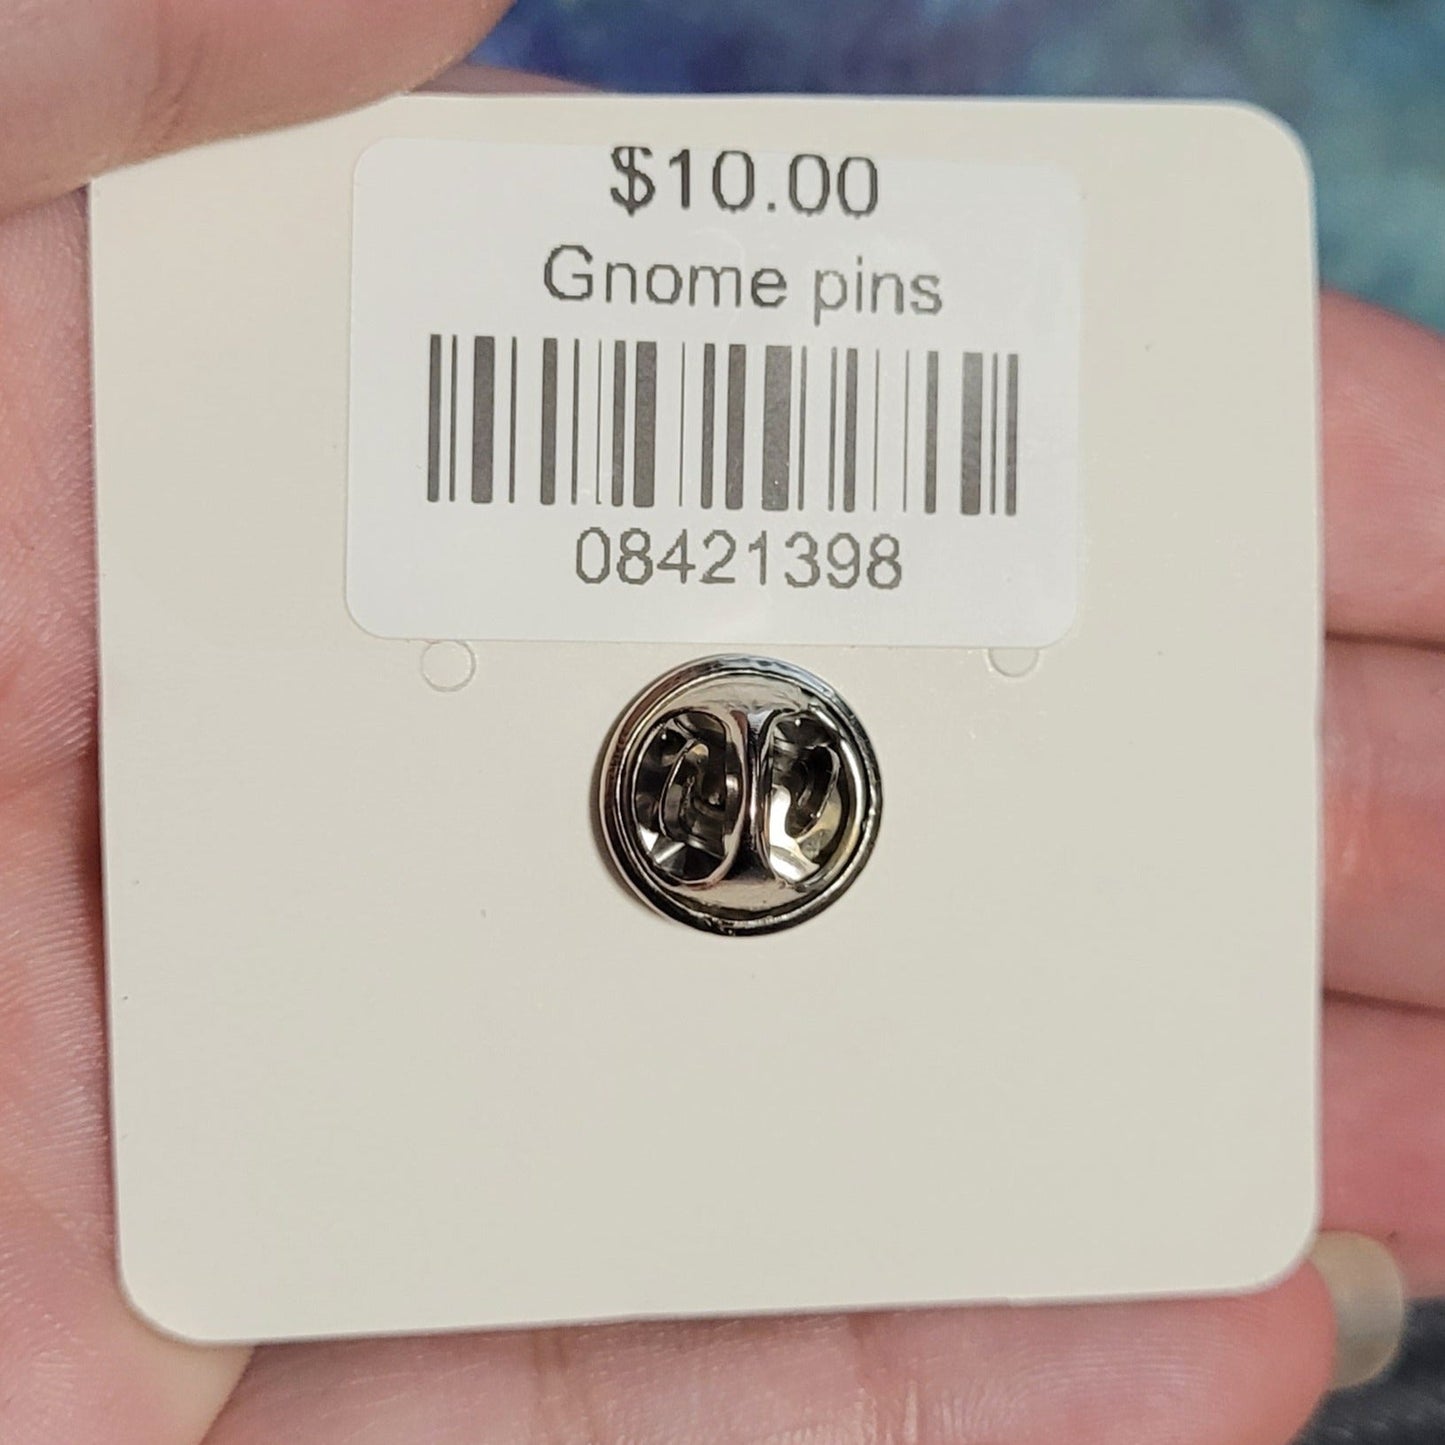 Gnome pins